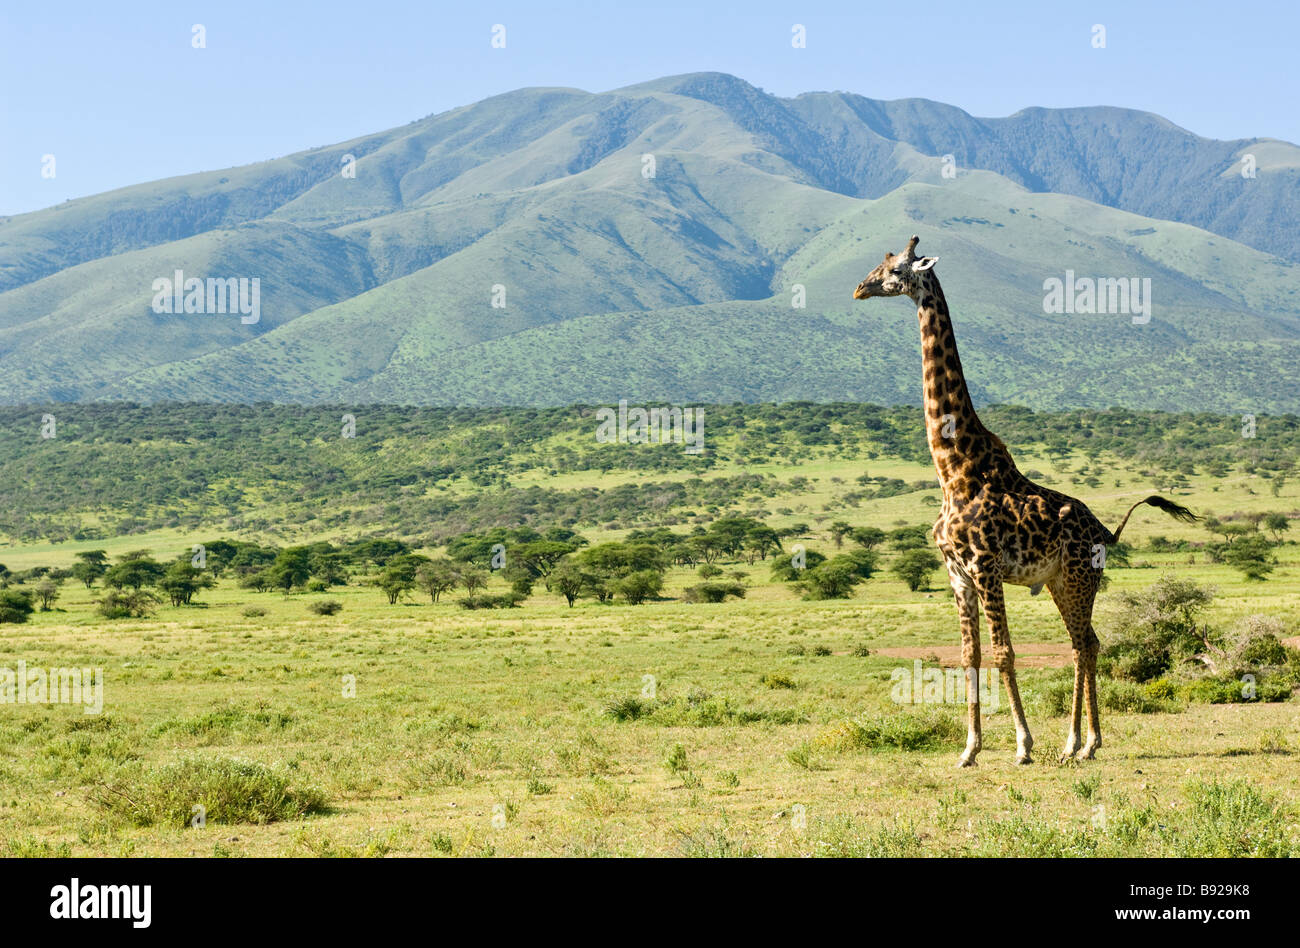 View of Giraffe Giraffa camelopardalis with Ngorongoro Highlands in background Ngorongoro Crater Highlands Tanzania Stock Photo